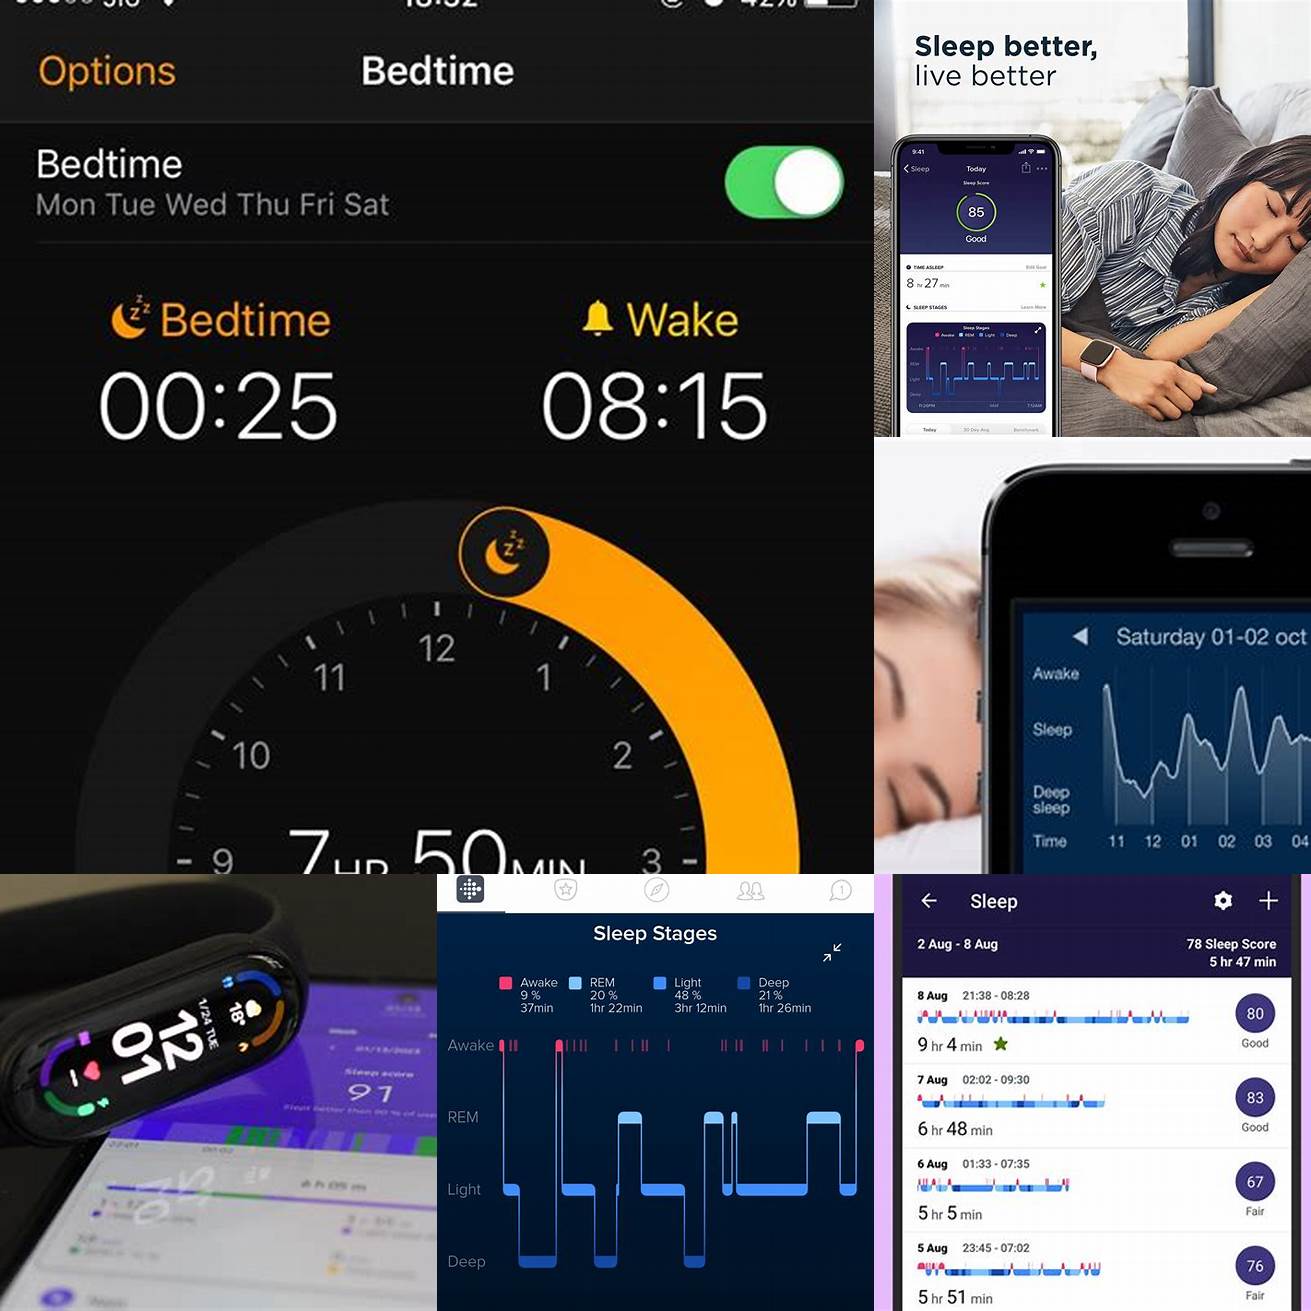 Sleep tracking feature